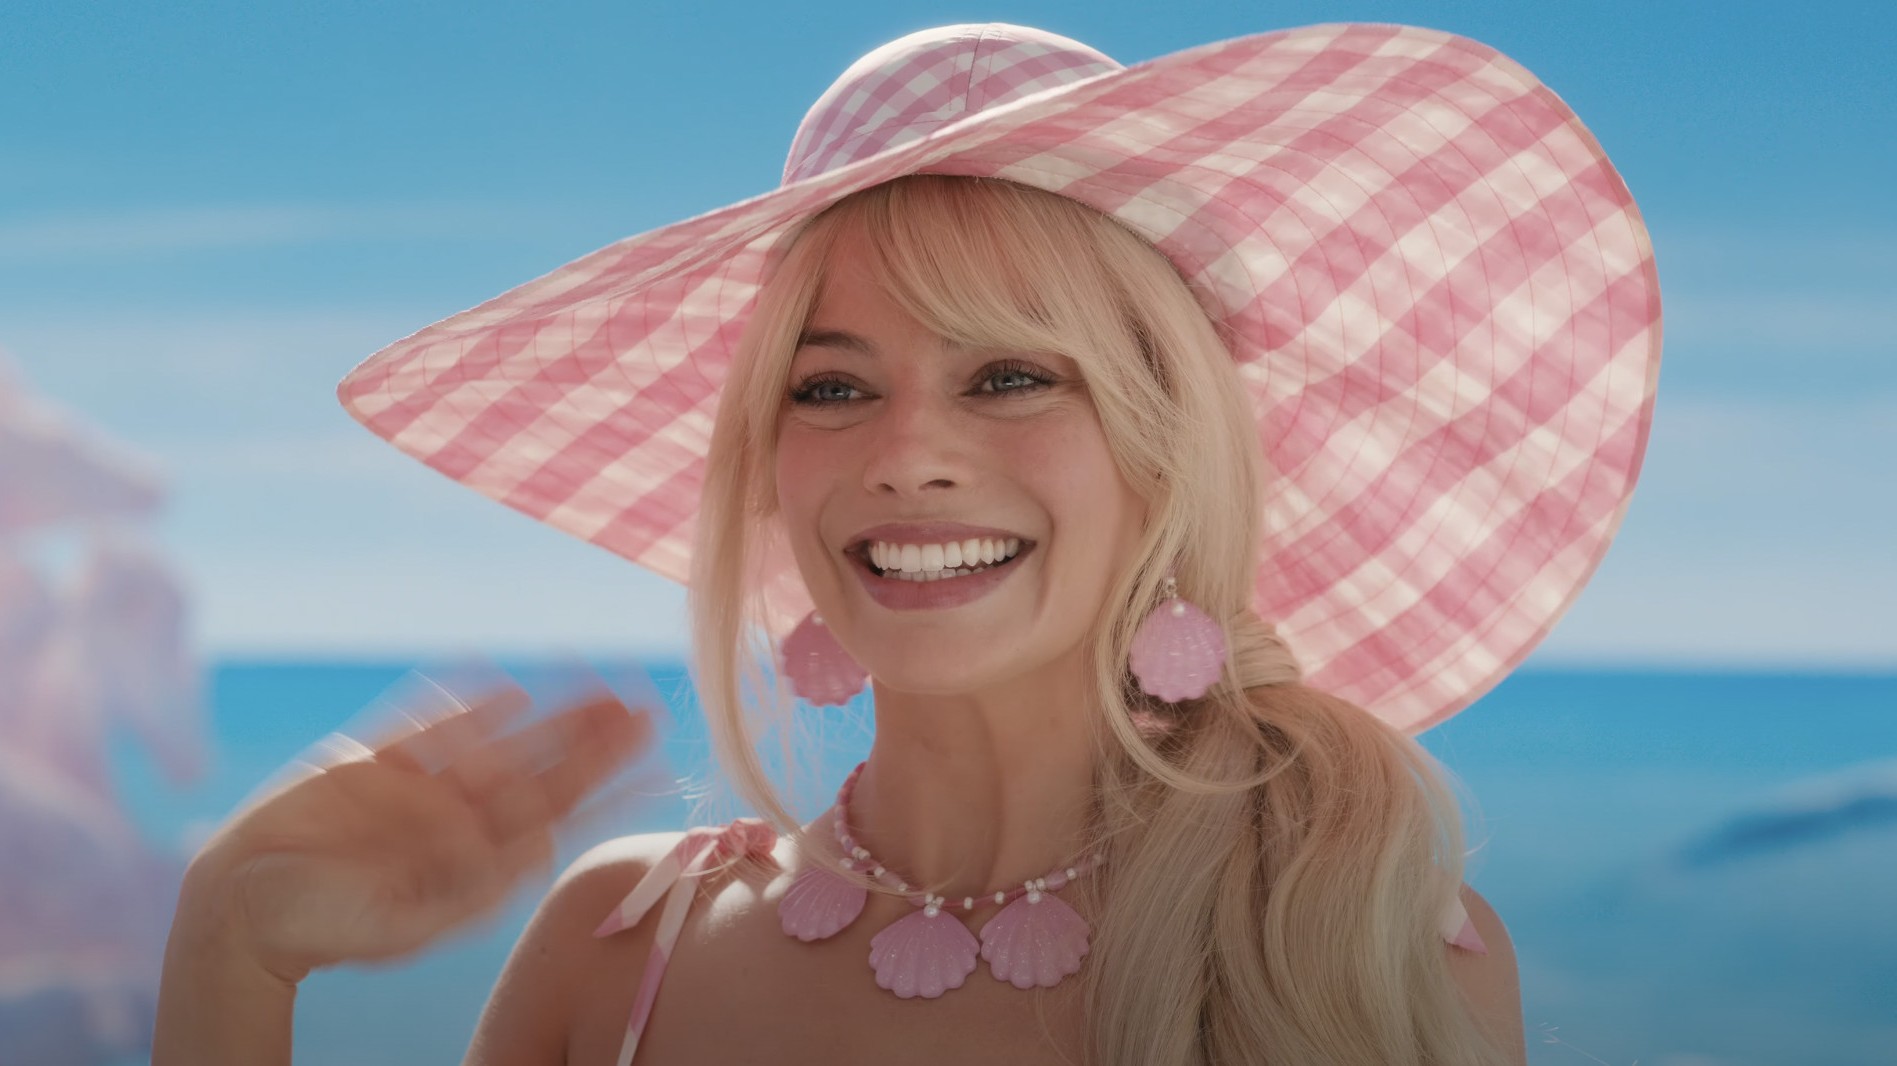 Greta Gerwig's Barbie Movie: Plot, Cast, Trailer, Release Date, Behind The Scenes Image, Reviews, Music